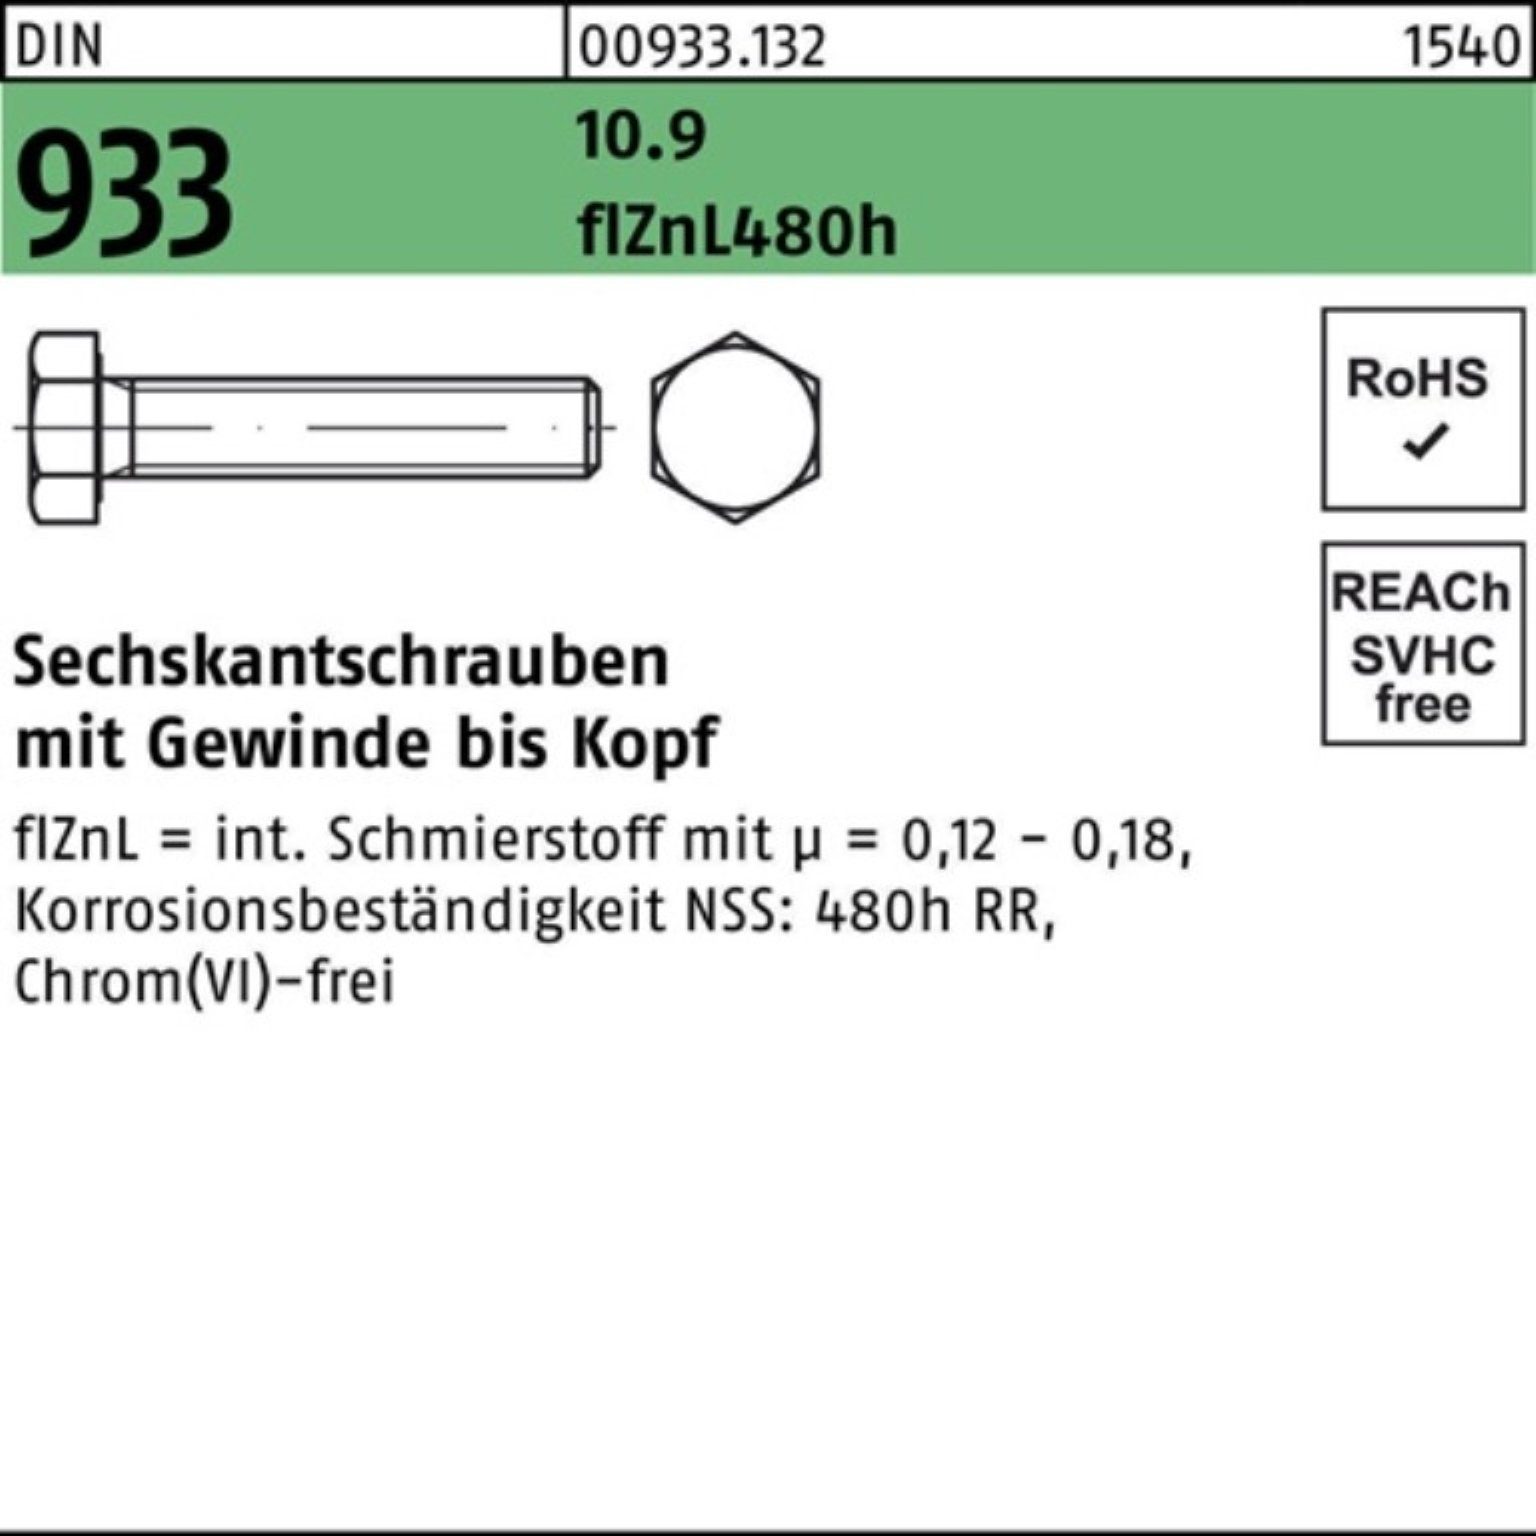 Sechskantschraube DIN Reyher VG 10.9 933 100er 65 Pack M24x Sechskantschraube flZnL/nc/x/x/480h